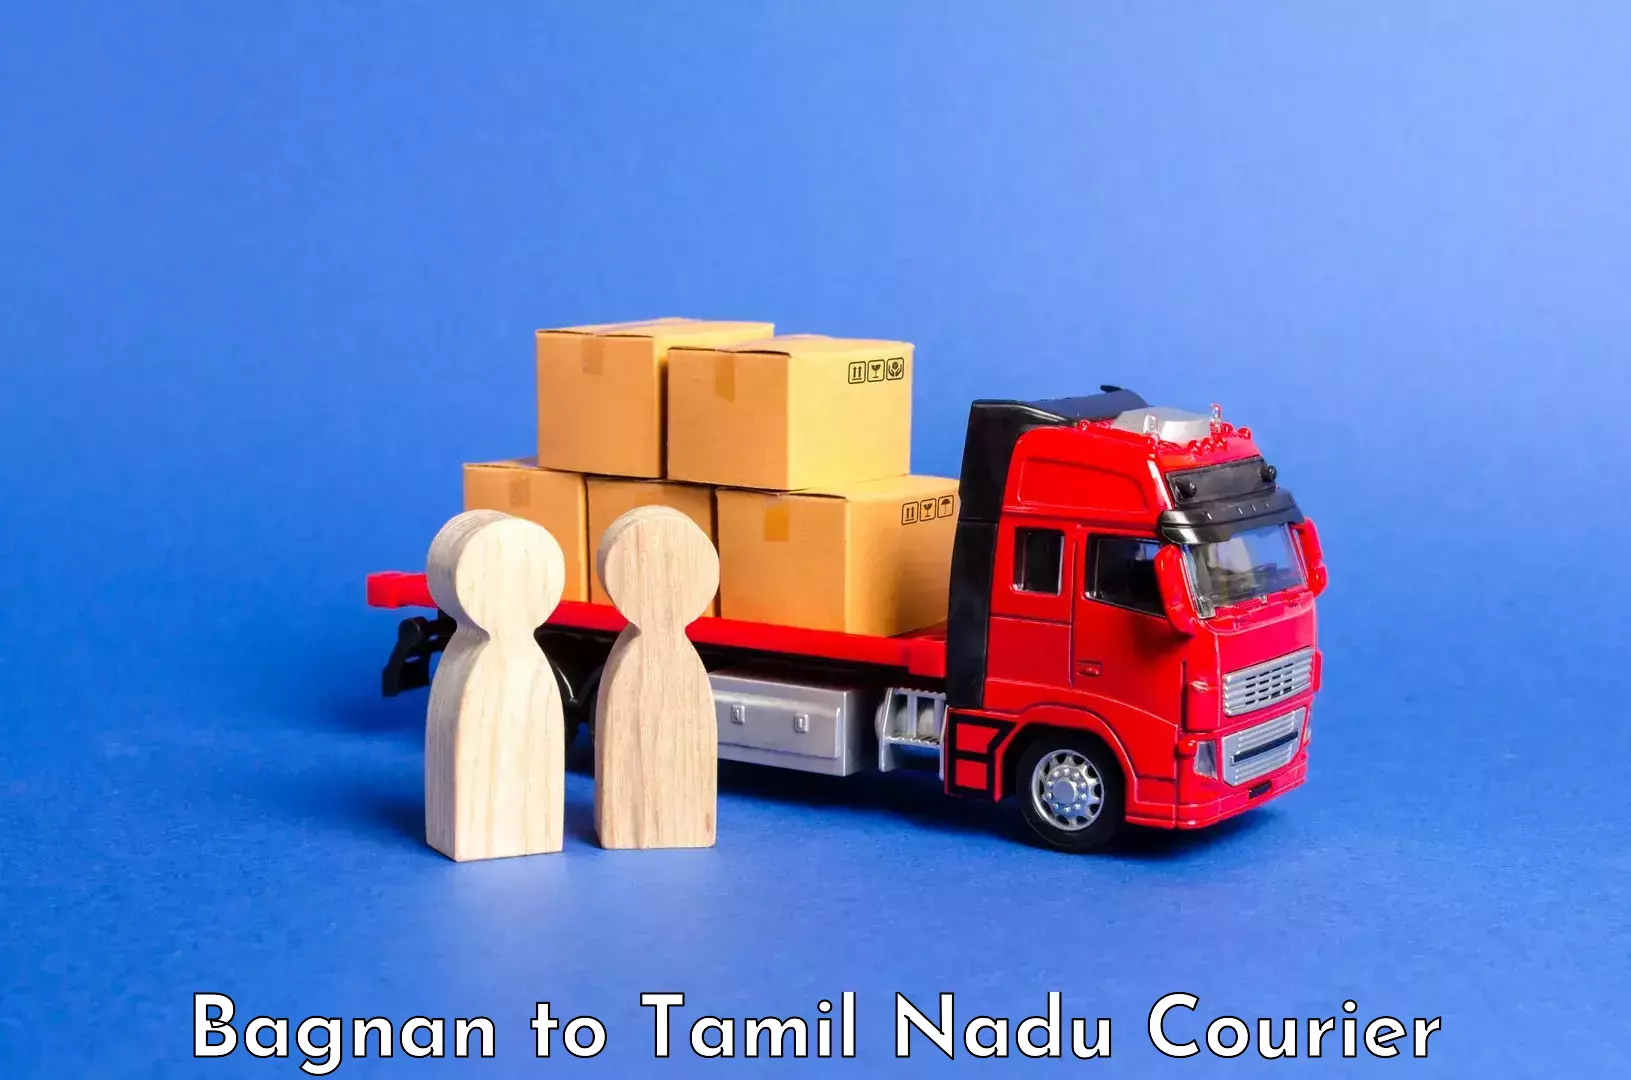 Baggage relocation service Bagnan to Tamil Nadu